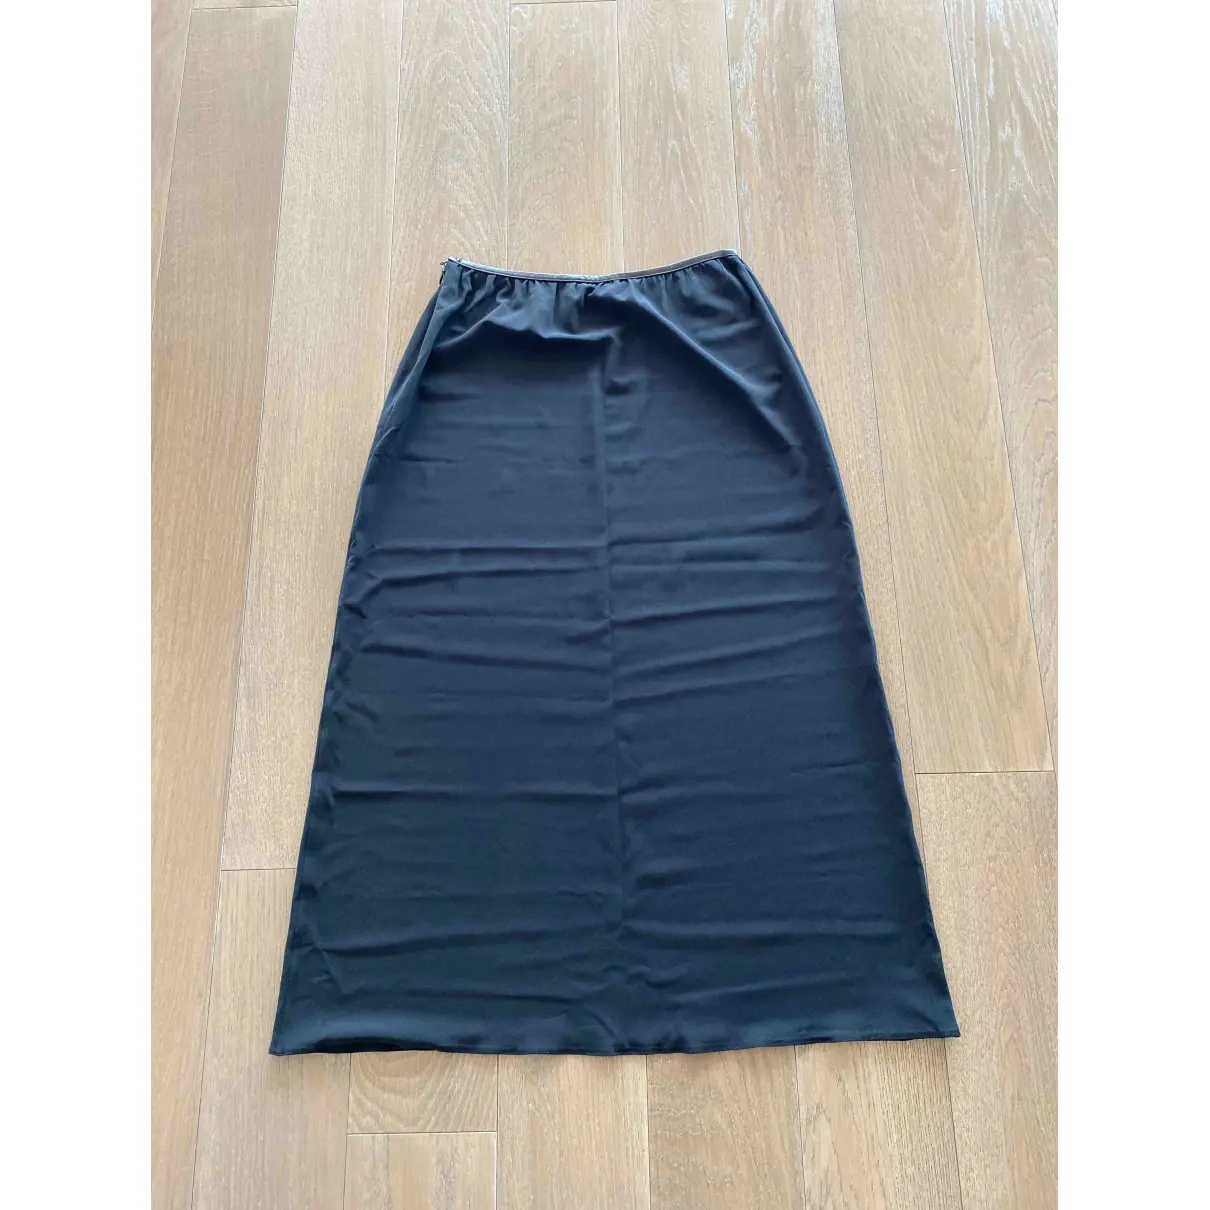 Buy Prada Maxi skirt online